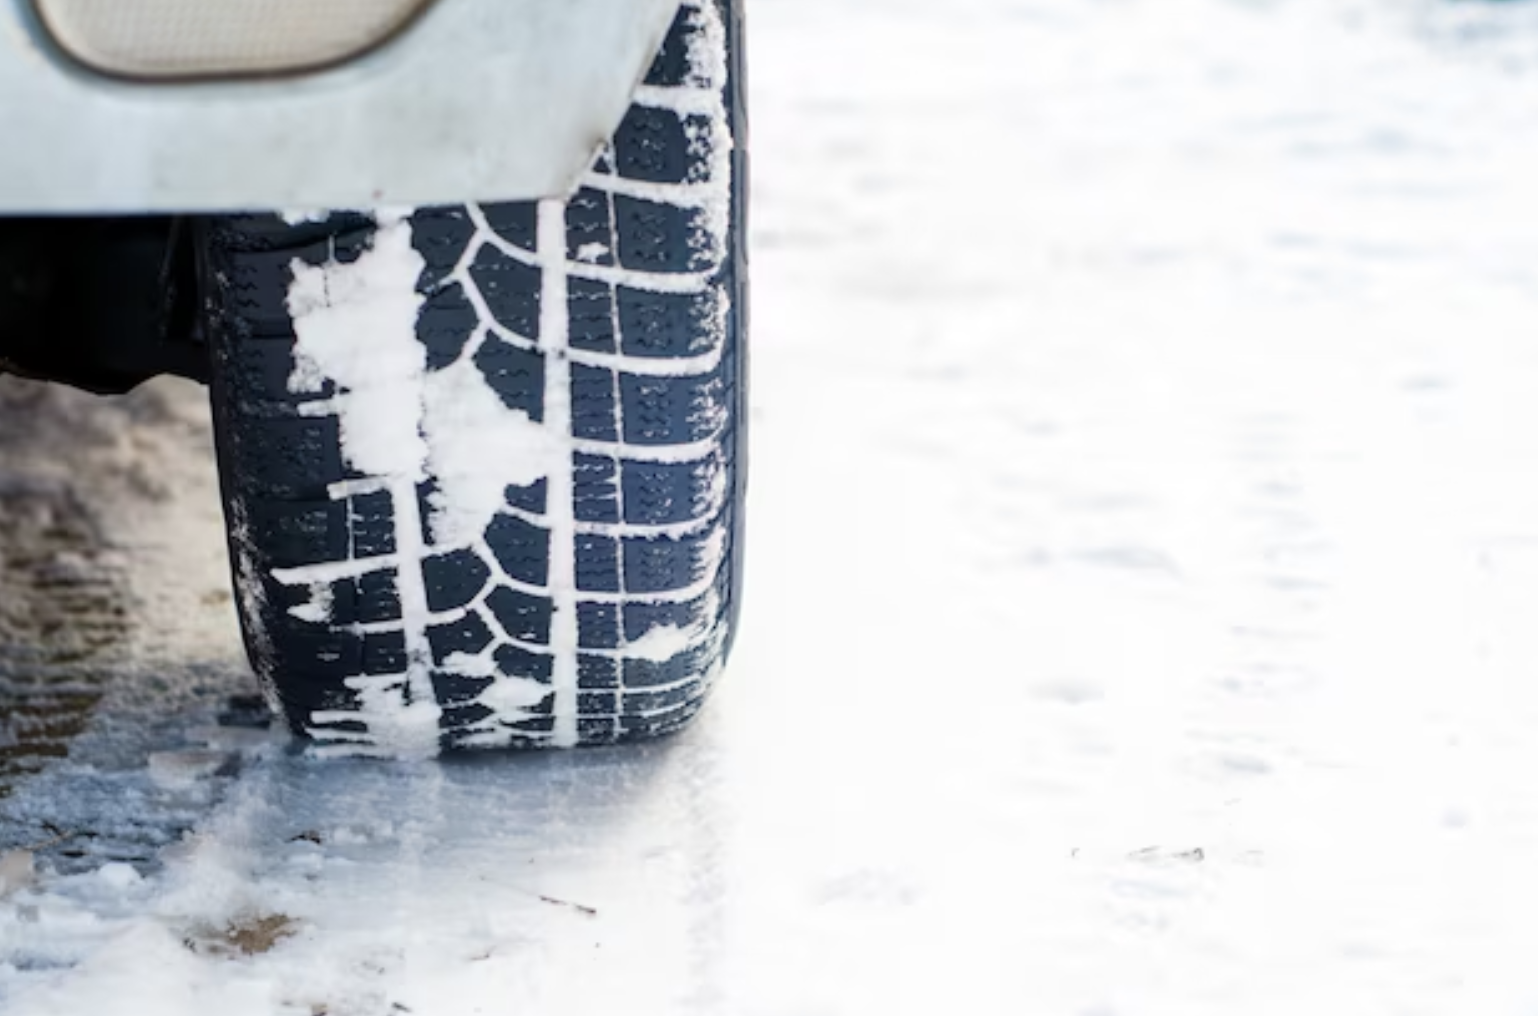 Bridgestone Blizzak Winter Tires – Should You Buy Them?